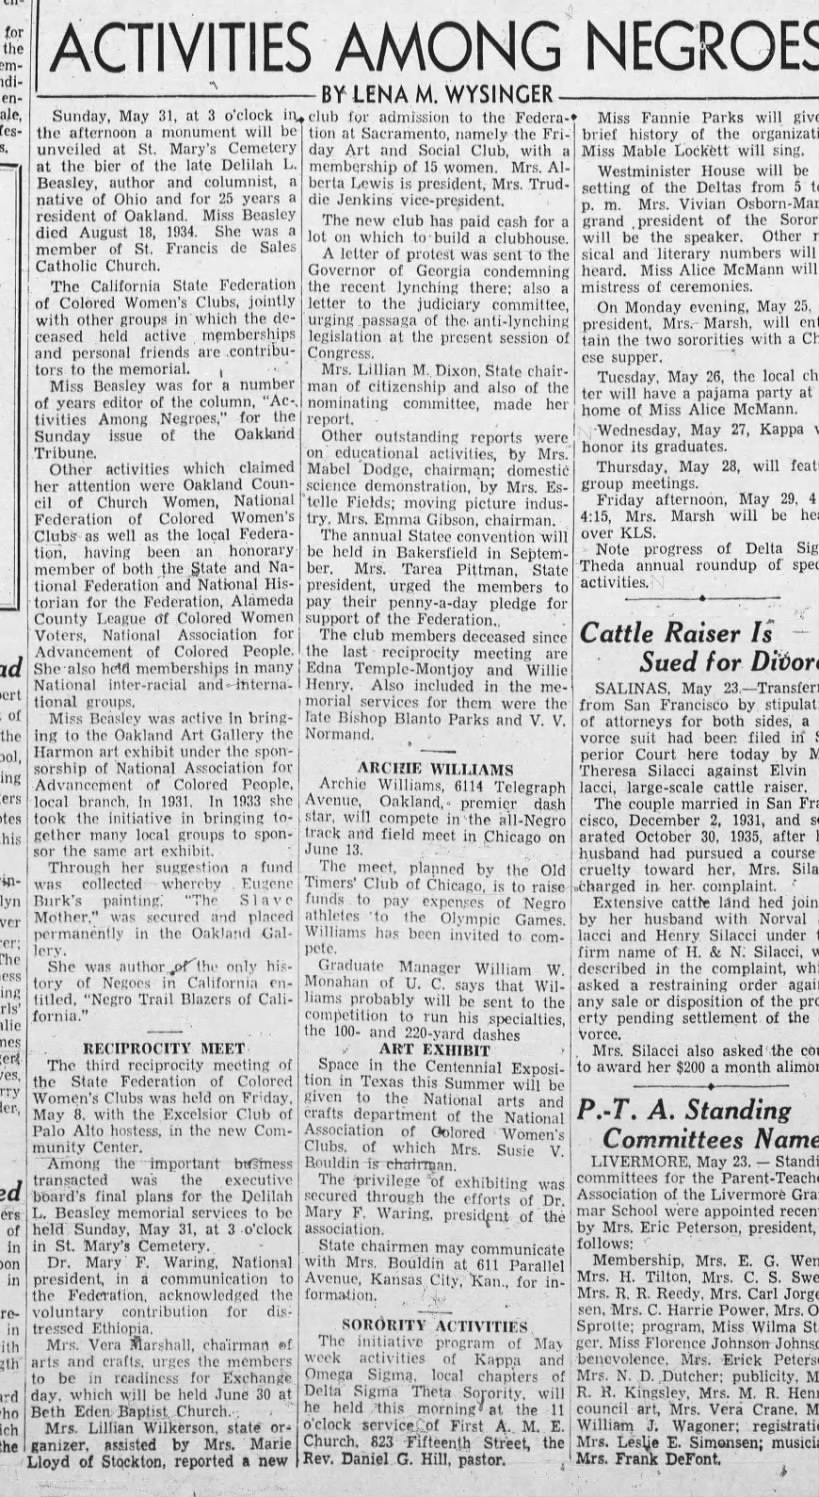 Memorial to be Held - Oakland Tribune May 24, 1936